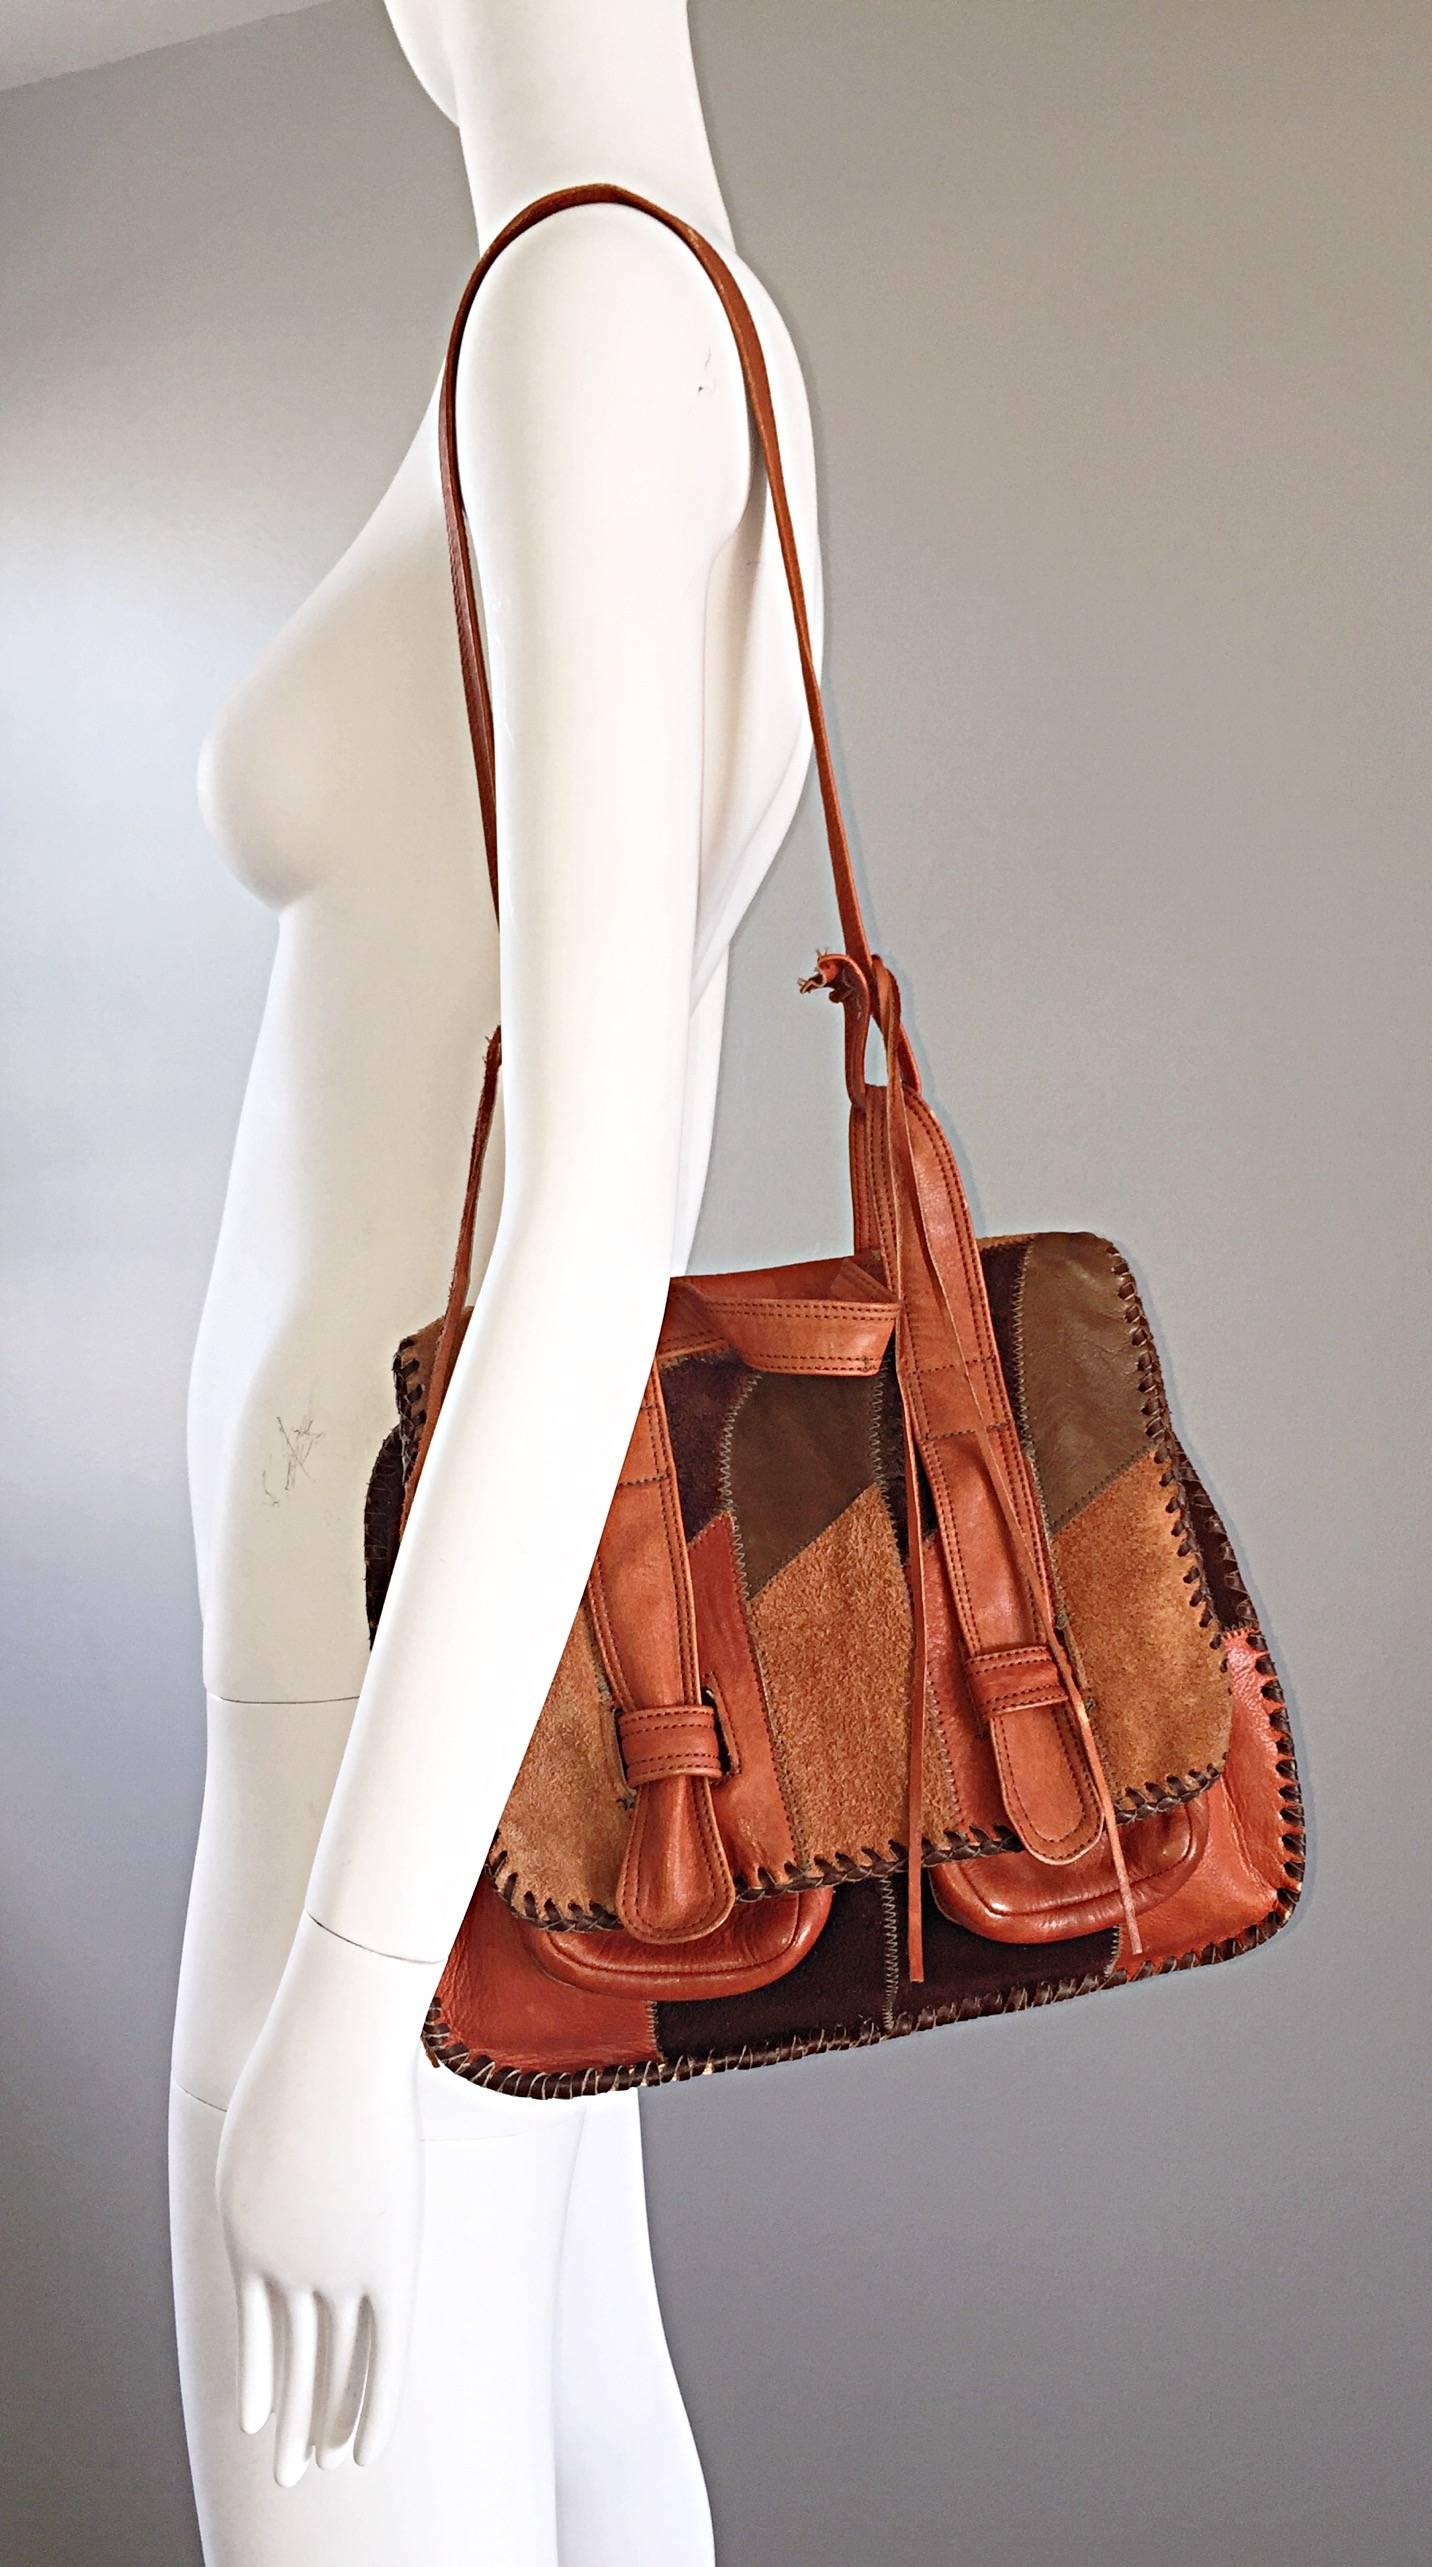 Women's Rare 1970s Char Vintage Leather / Suede Tan and Brown Boho Shoulder Bag Satchel